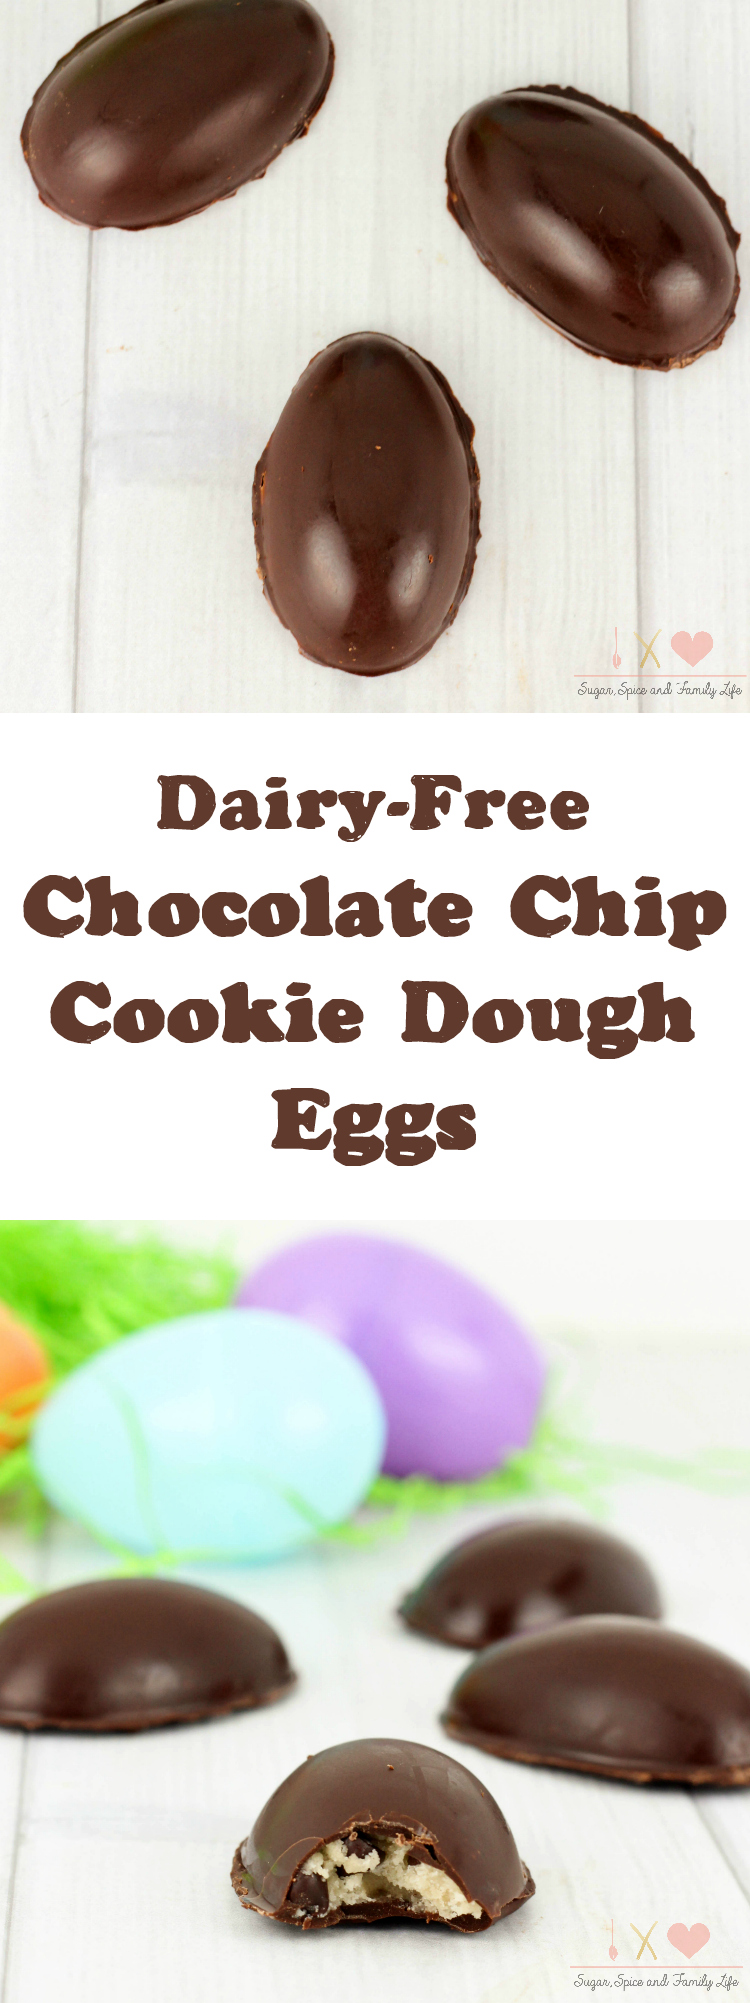 Dairy-Free Chocolate Chip Cookie Dough Eggs Recipe